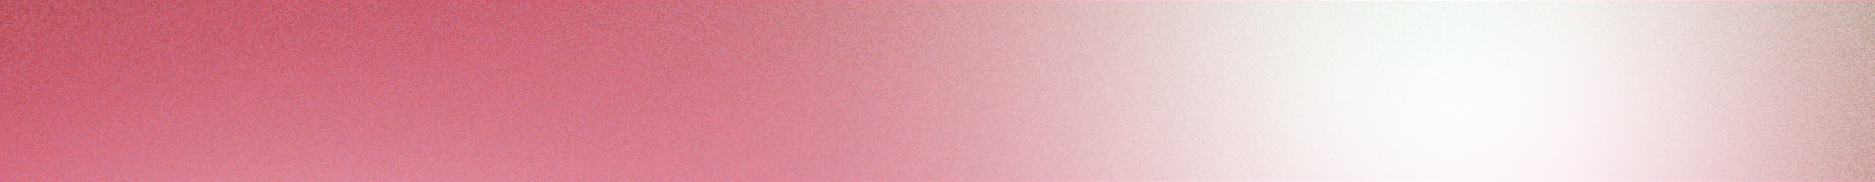 red transparant gradient